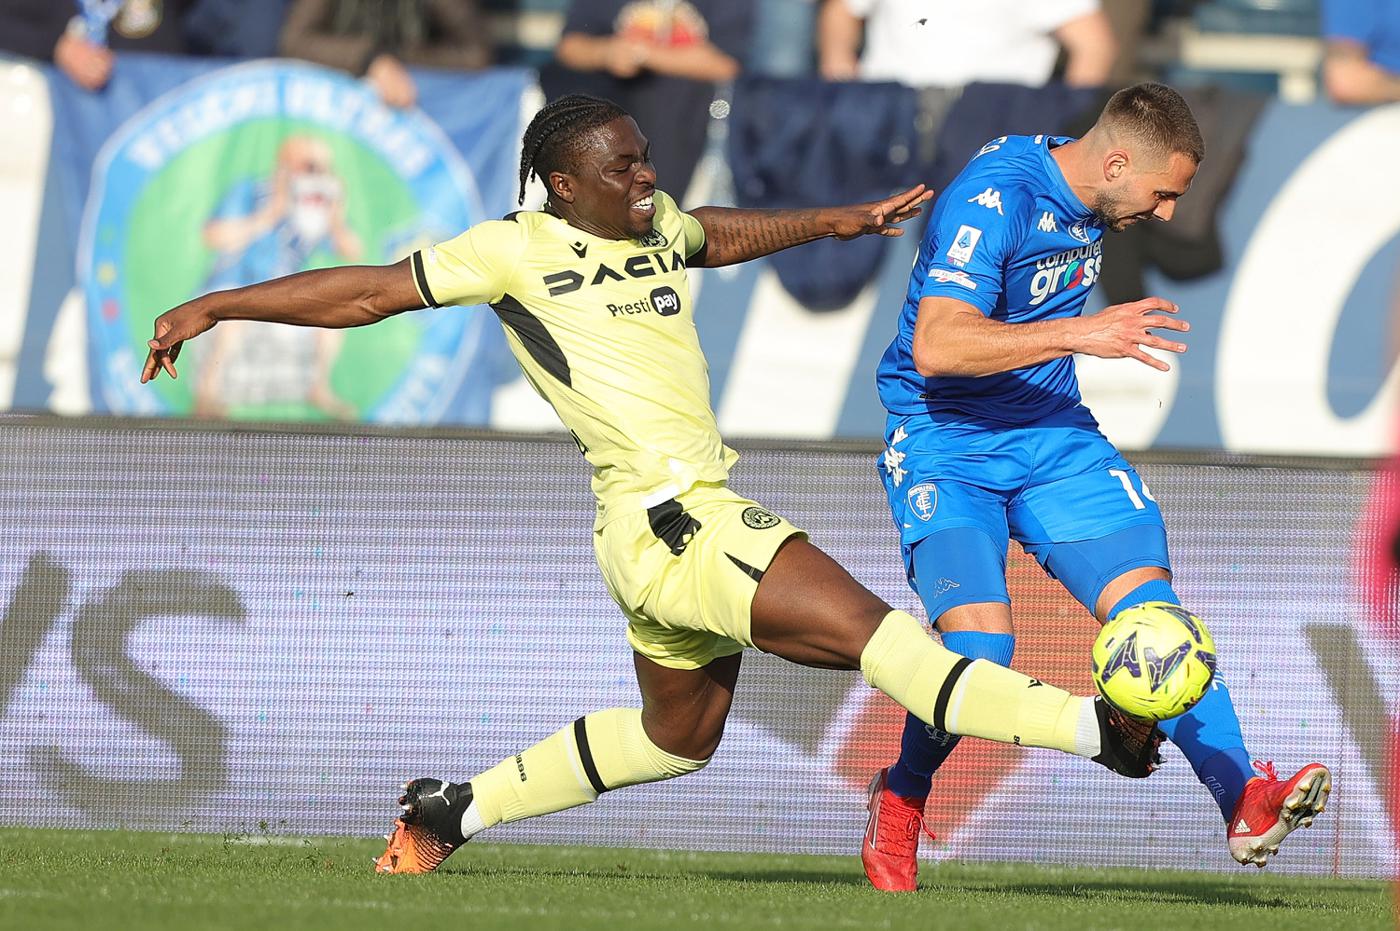 Empoli vs Udinese - 0-1. Italian Championship, round 26. Match review, statistics.